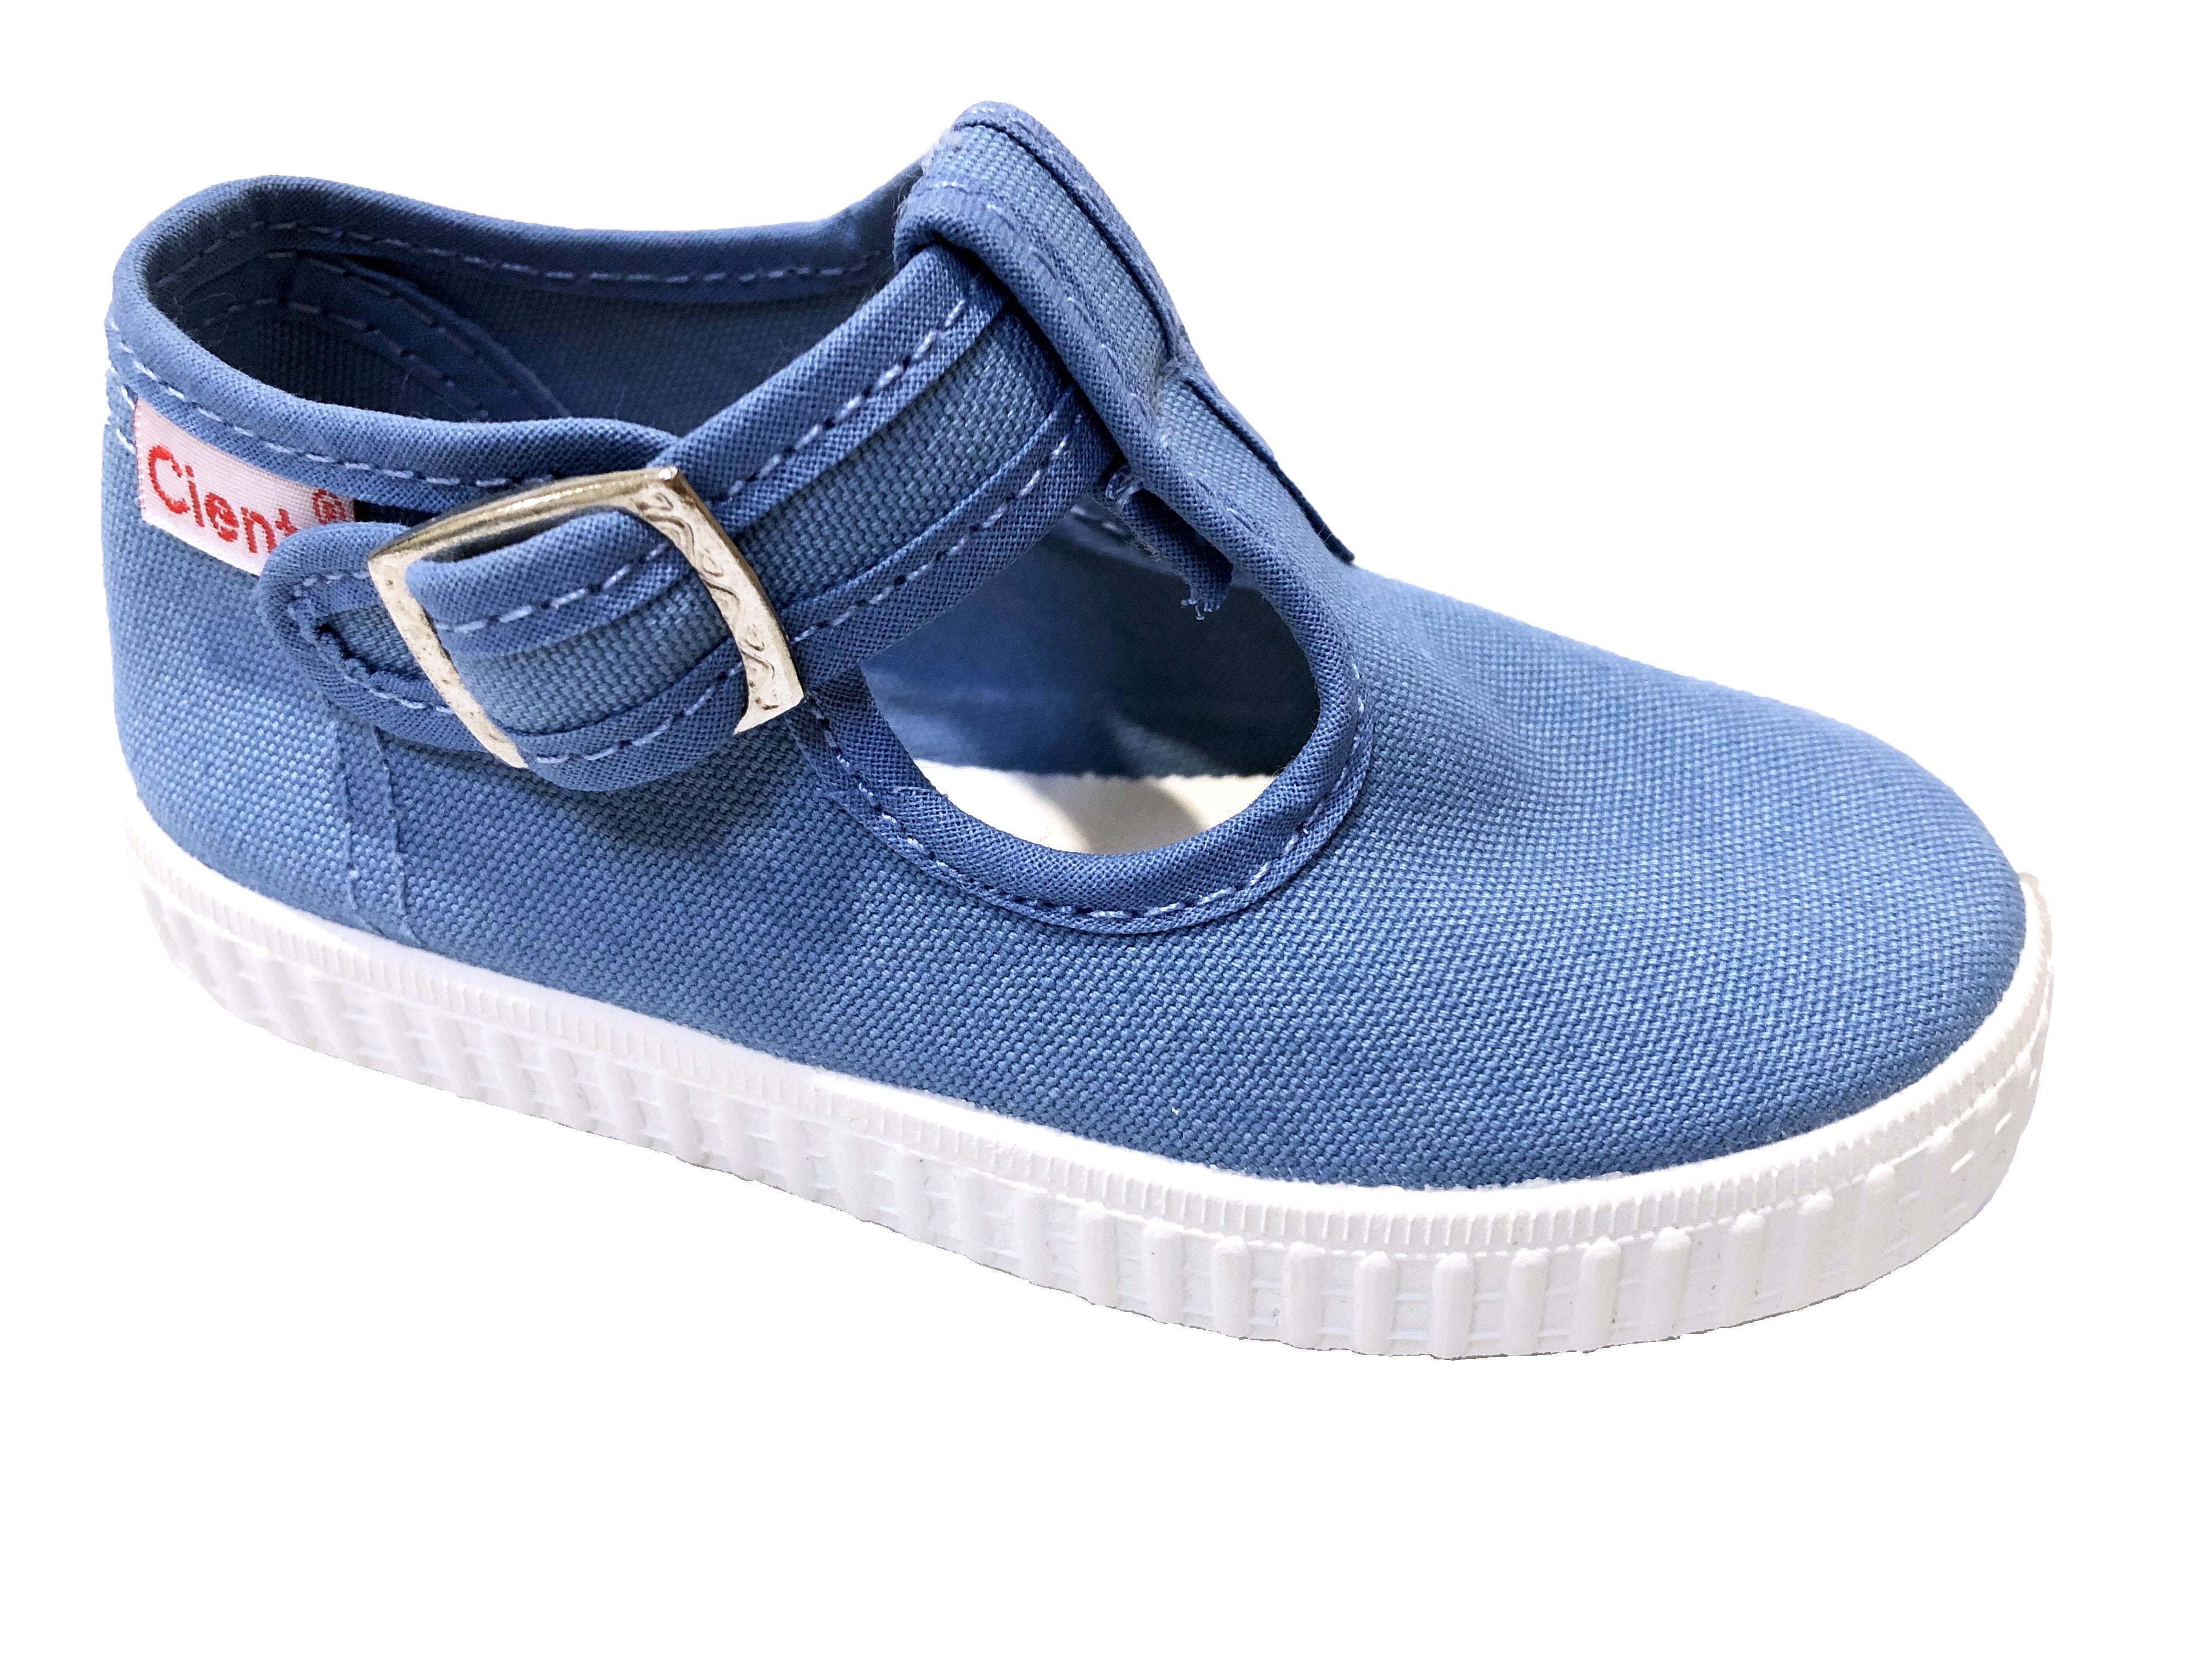 Cienta shoes light blue denim t-strap